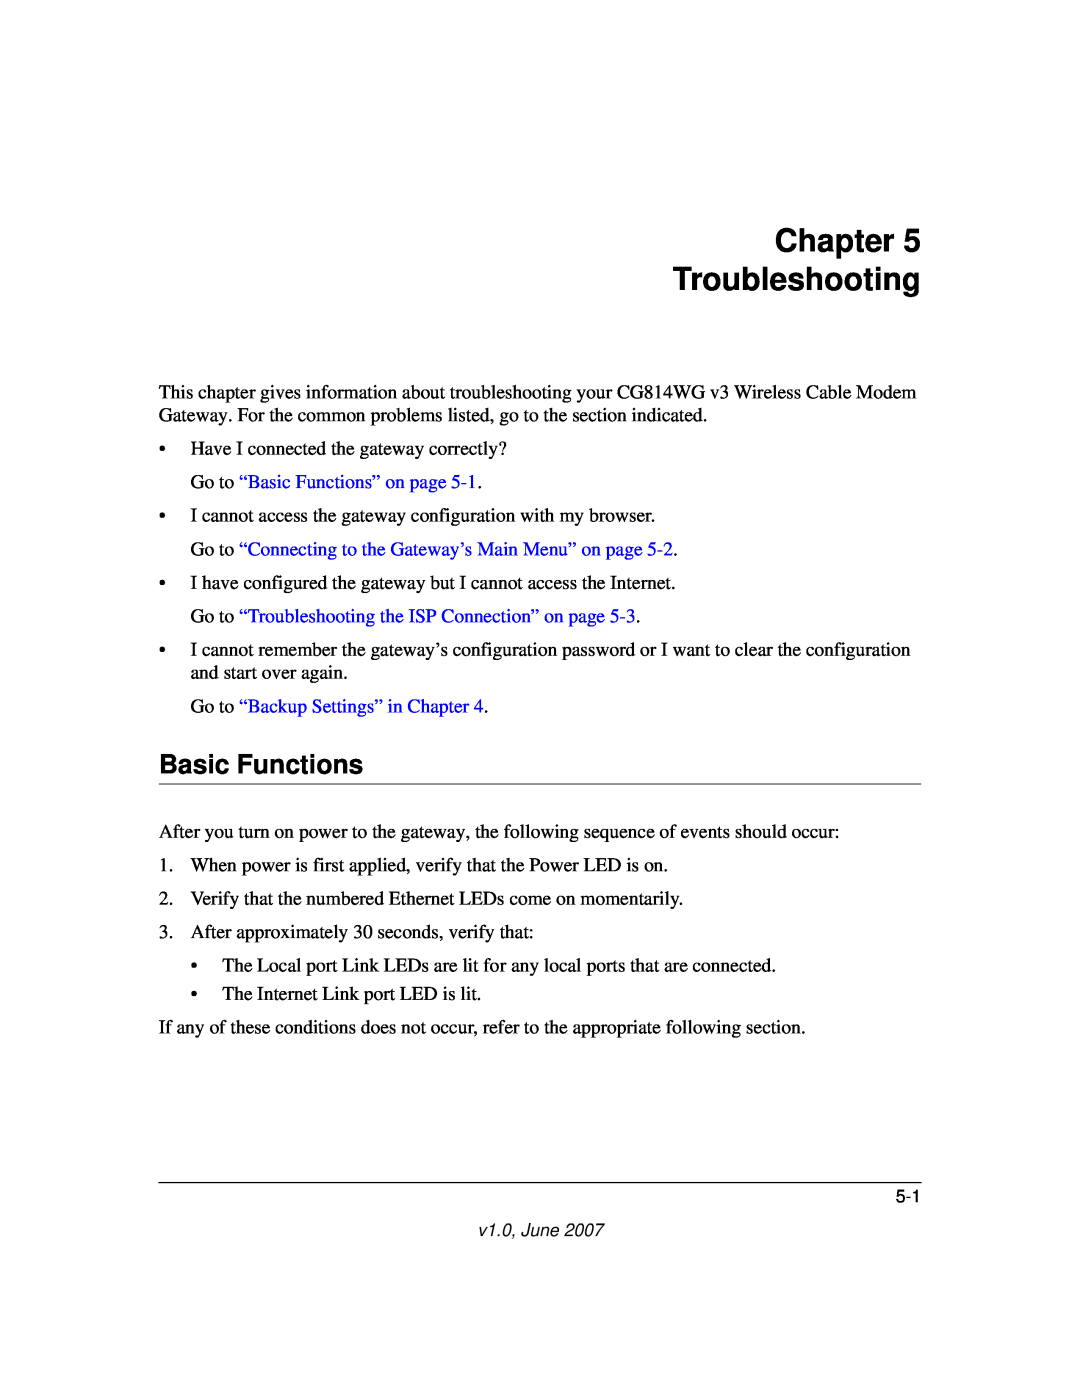 NETGEAR CG814WG V3 manual Chapter Troubleshooting, Basic Functions 